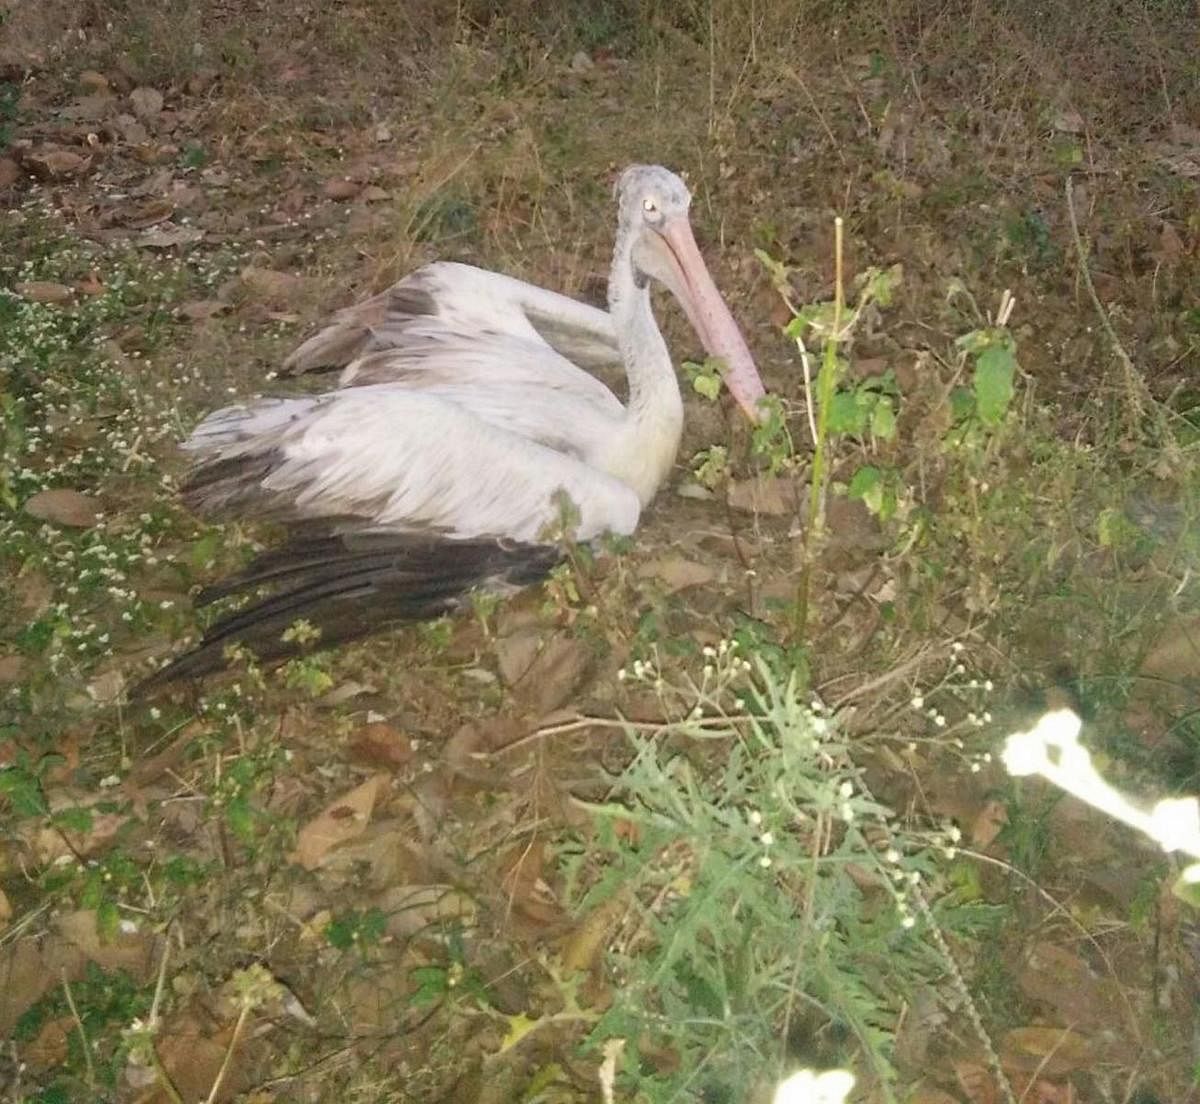 The pelican that has fallen from a tree at Kokkarebellu, near Bharthinagar, in Mandya district.